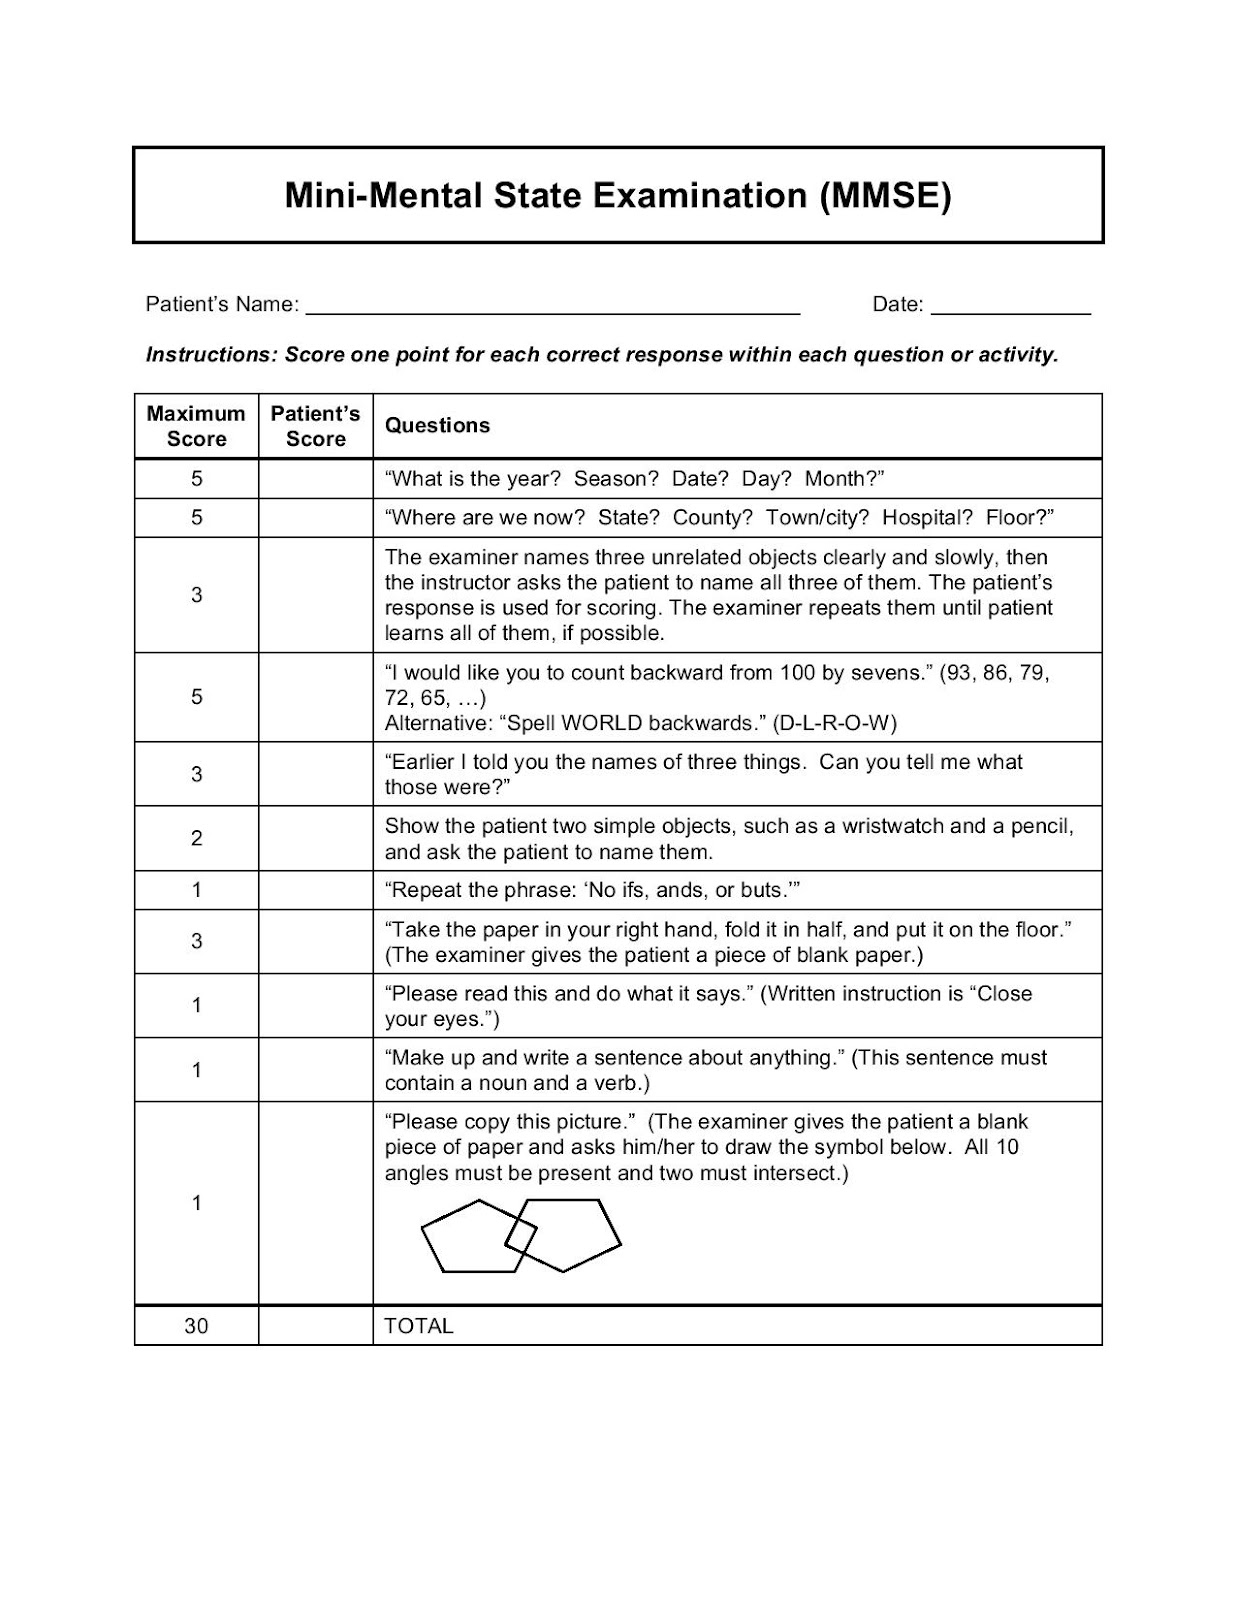 Mmse Test Form, free PDF download